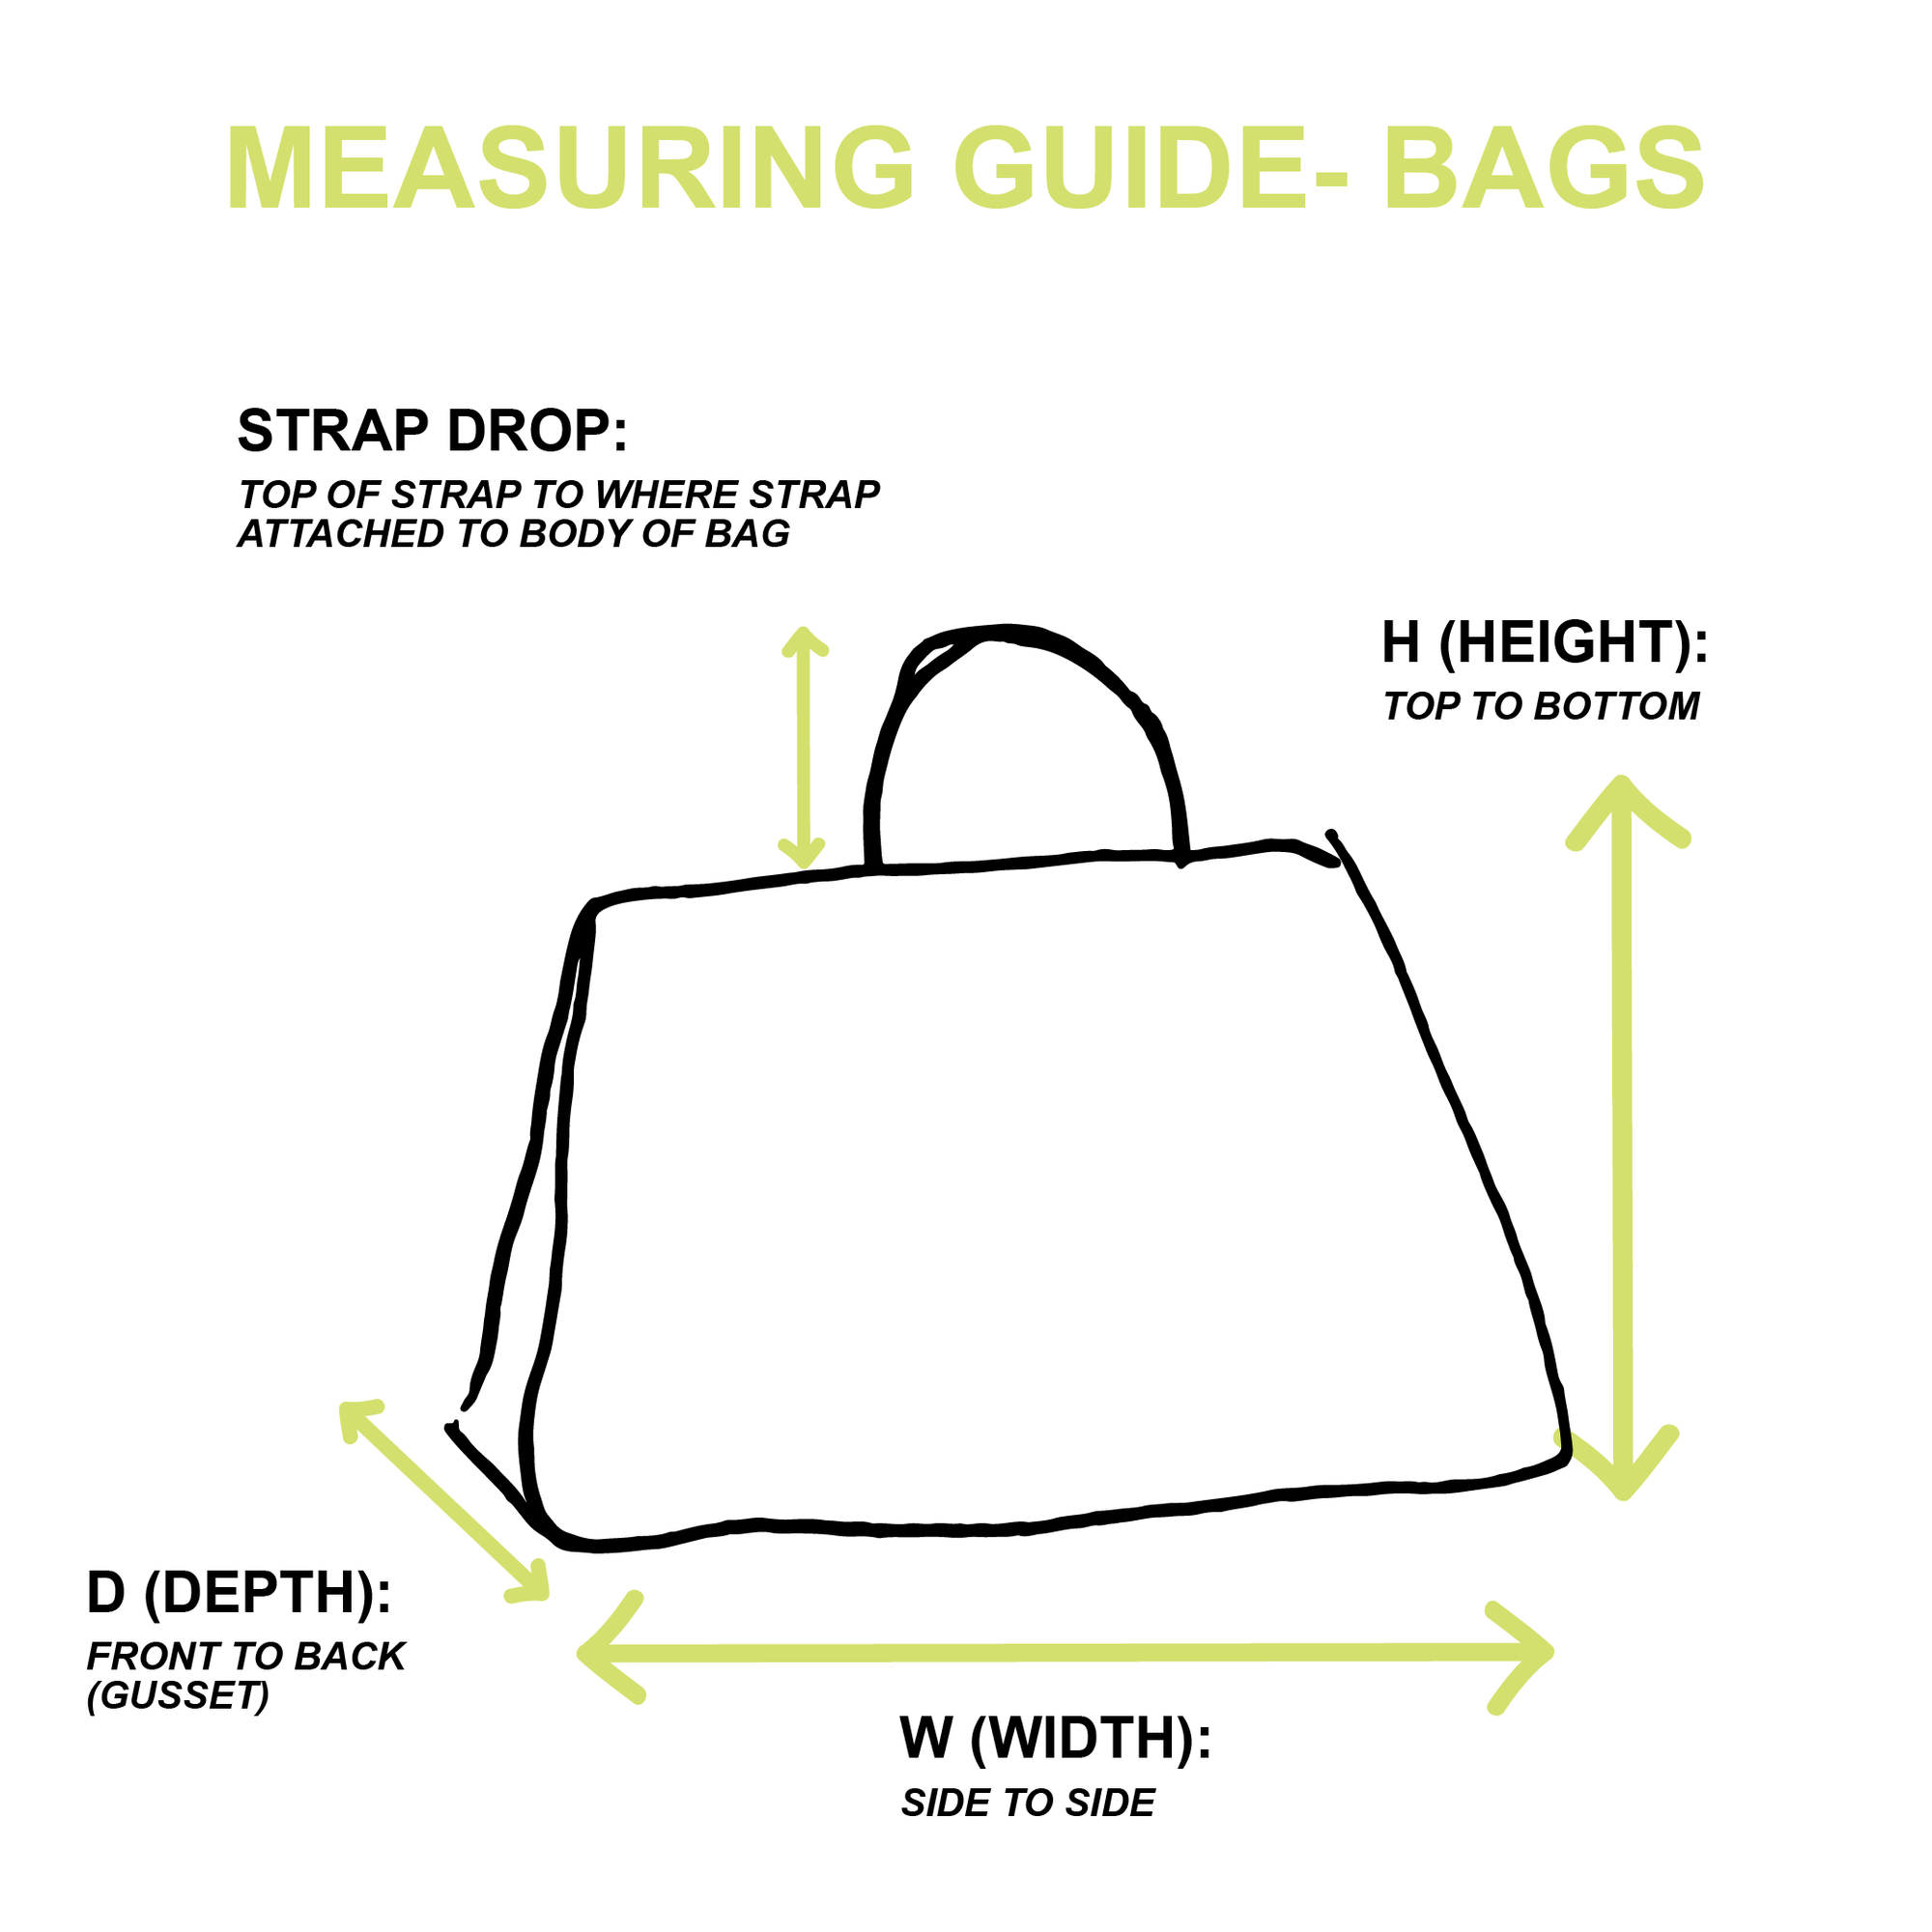 Chanel Black Satin Mini Kelly Bag - Handbags